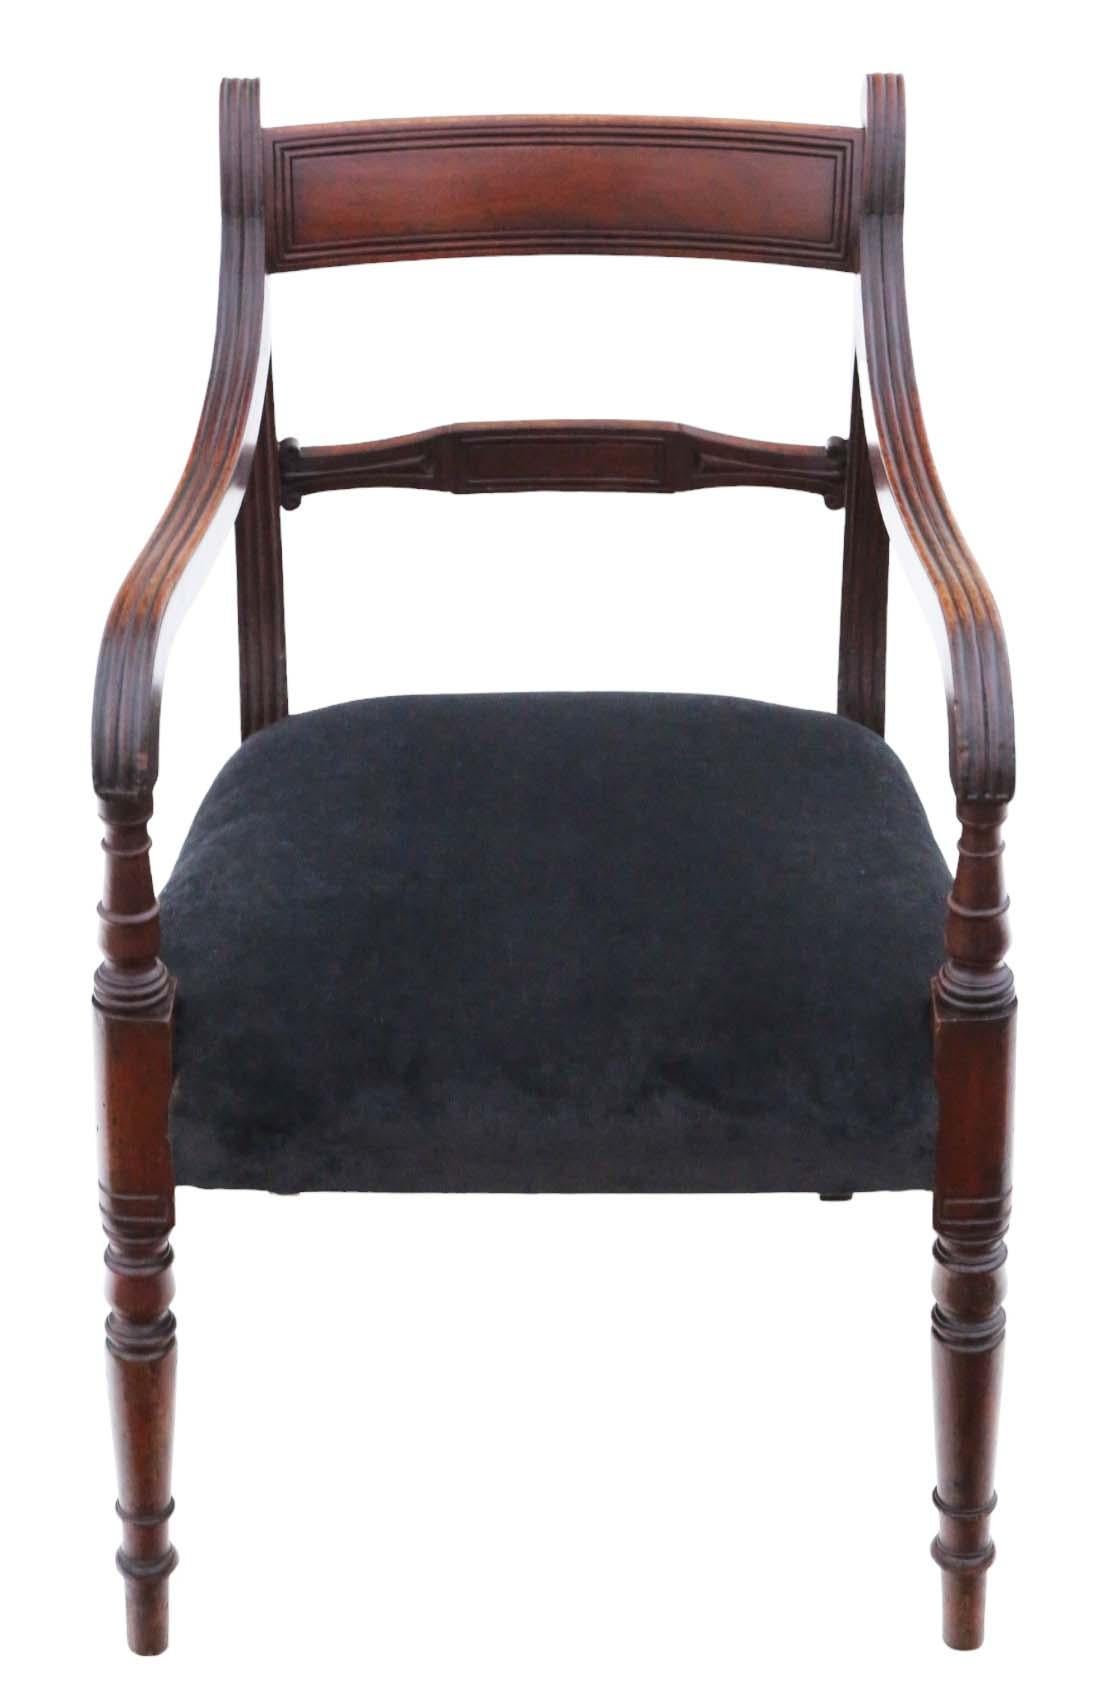 William IV Antique fine quality set of 6 (4 plus 2) Georgian C1810 mahogany dining chairs